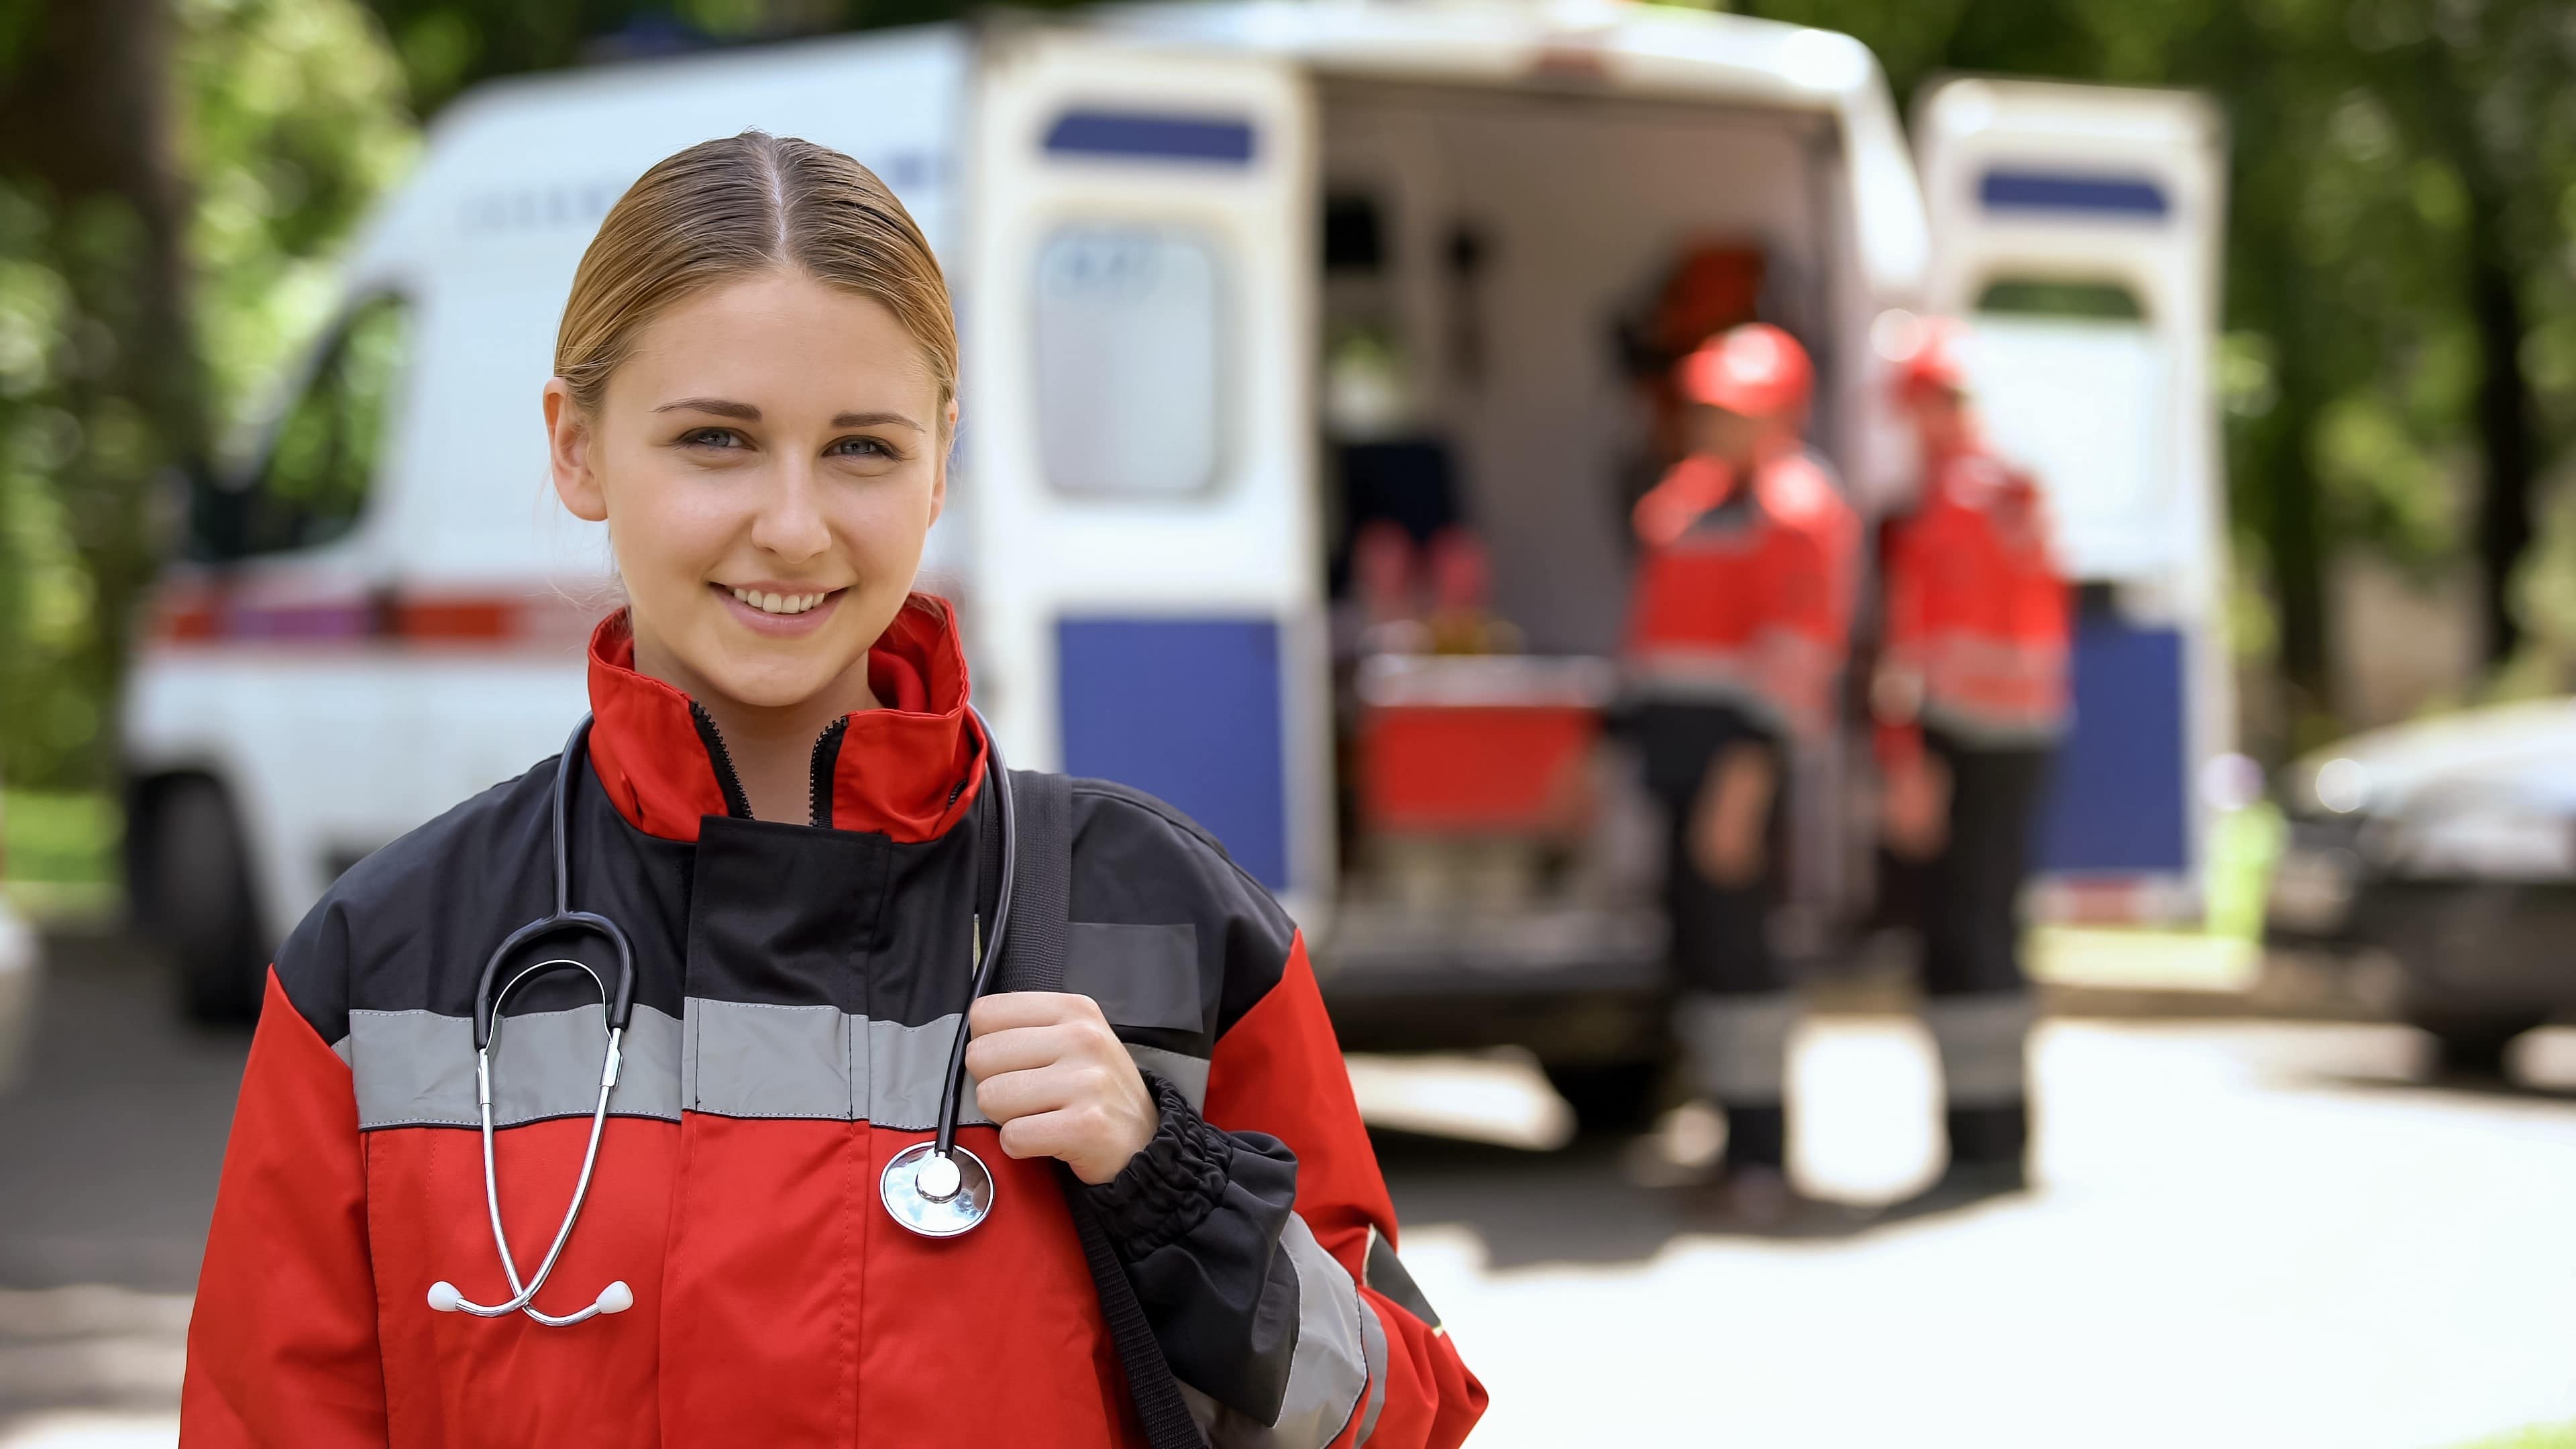 Smiling female paramedic